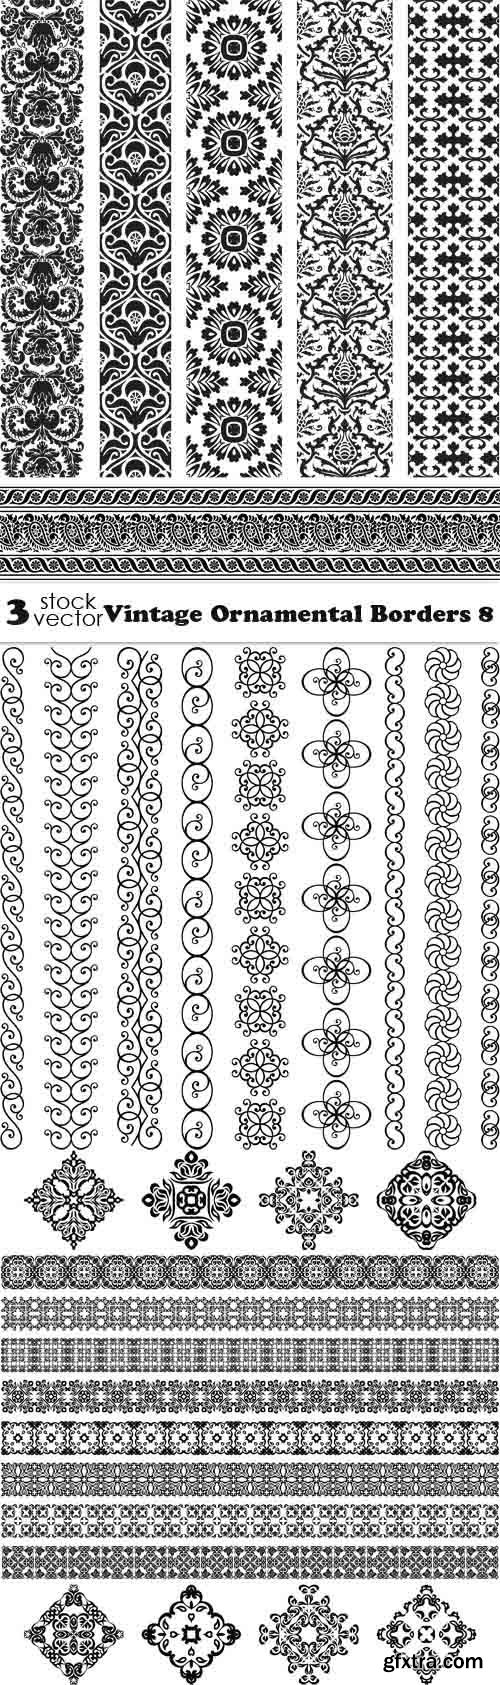 Vectors - Vintage Ornamental Borders 8